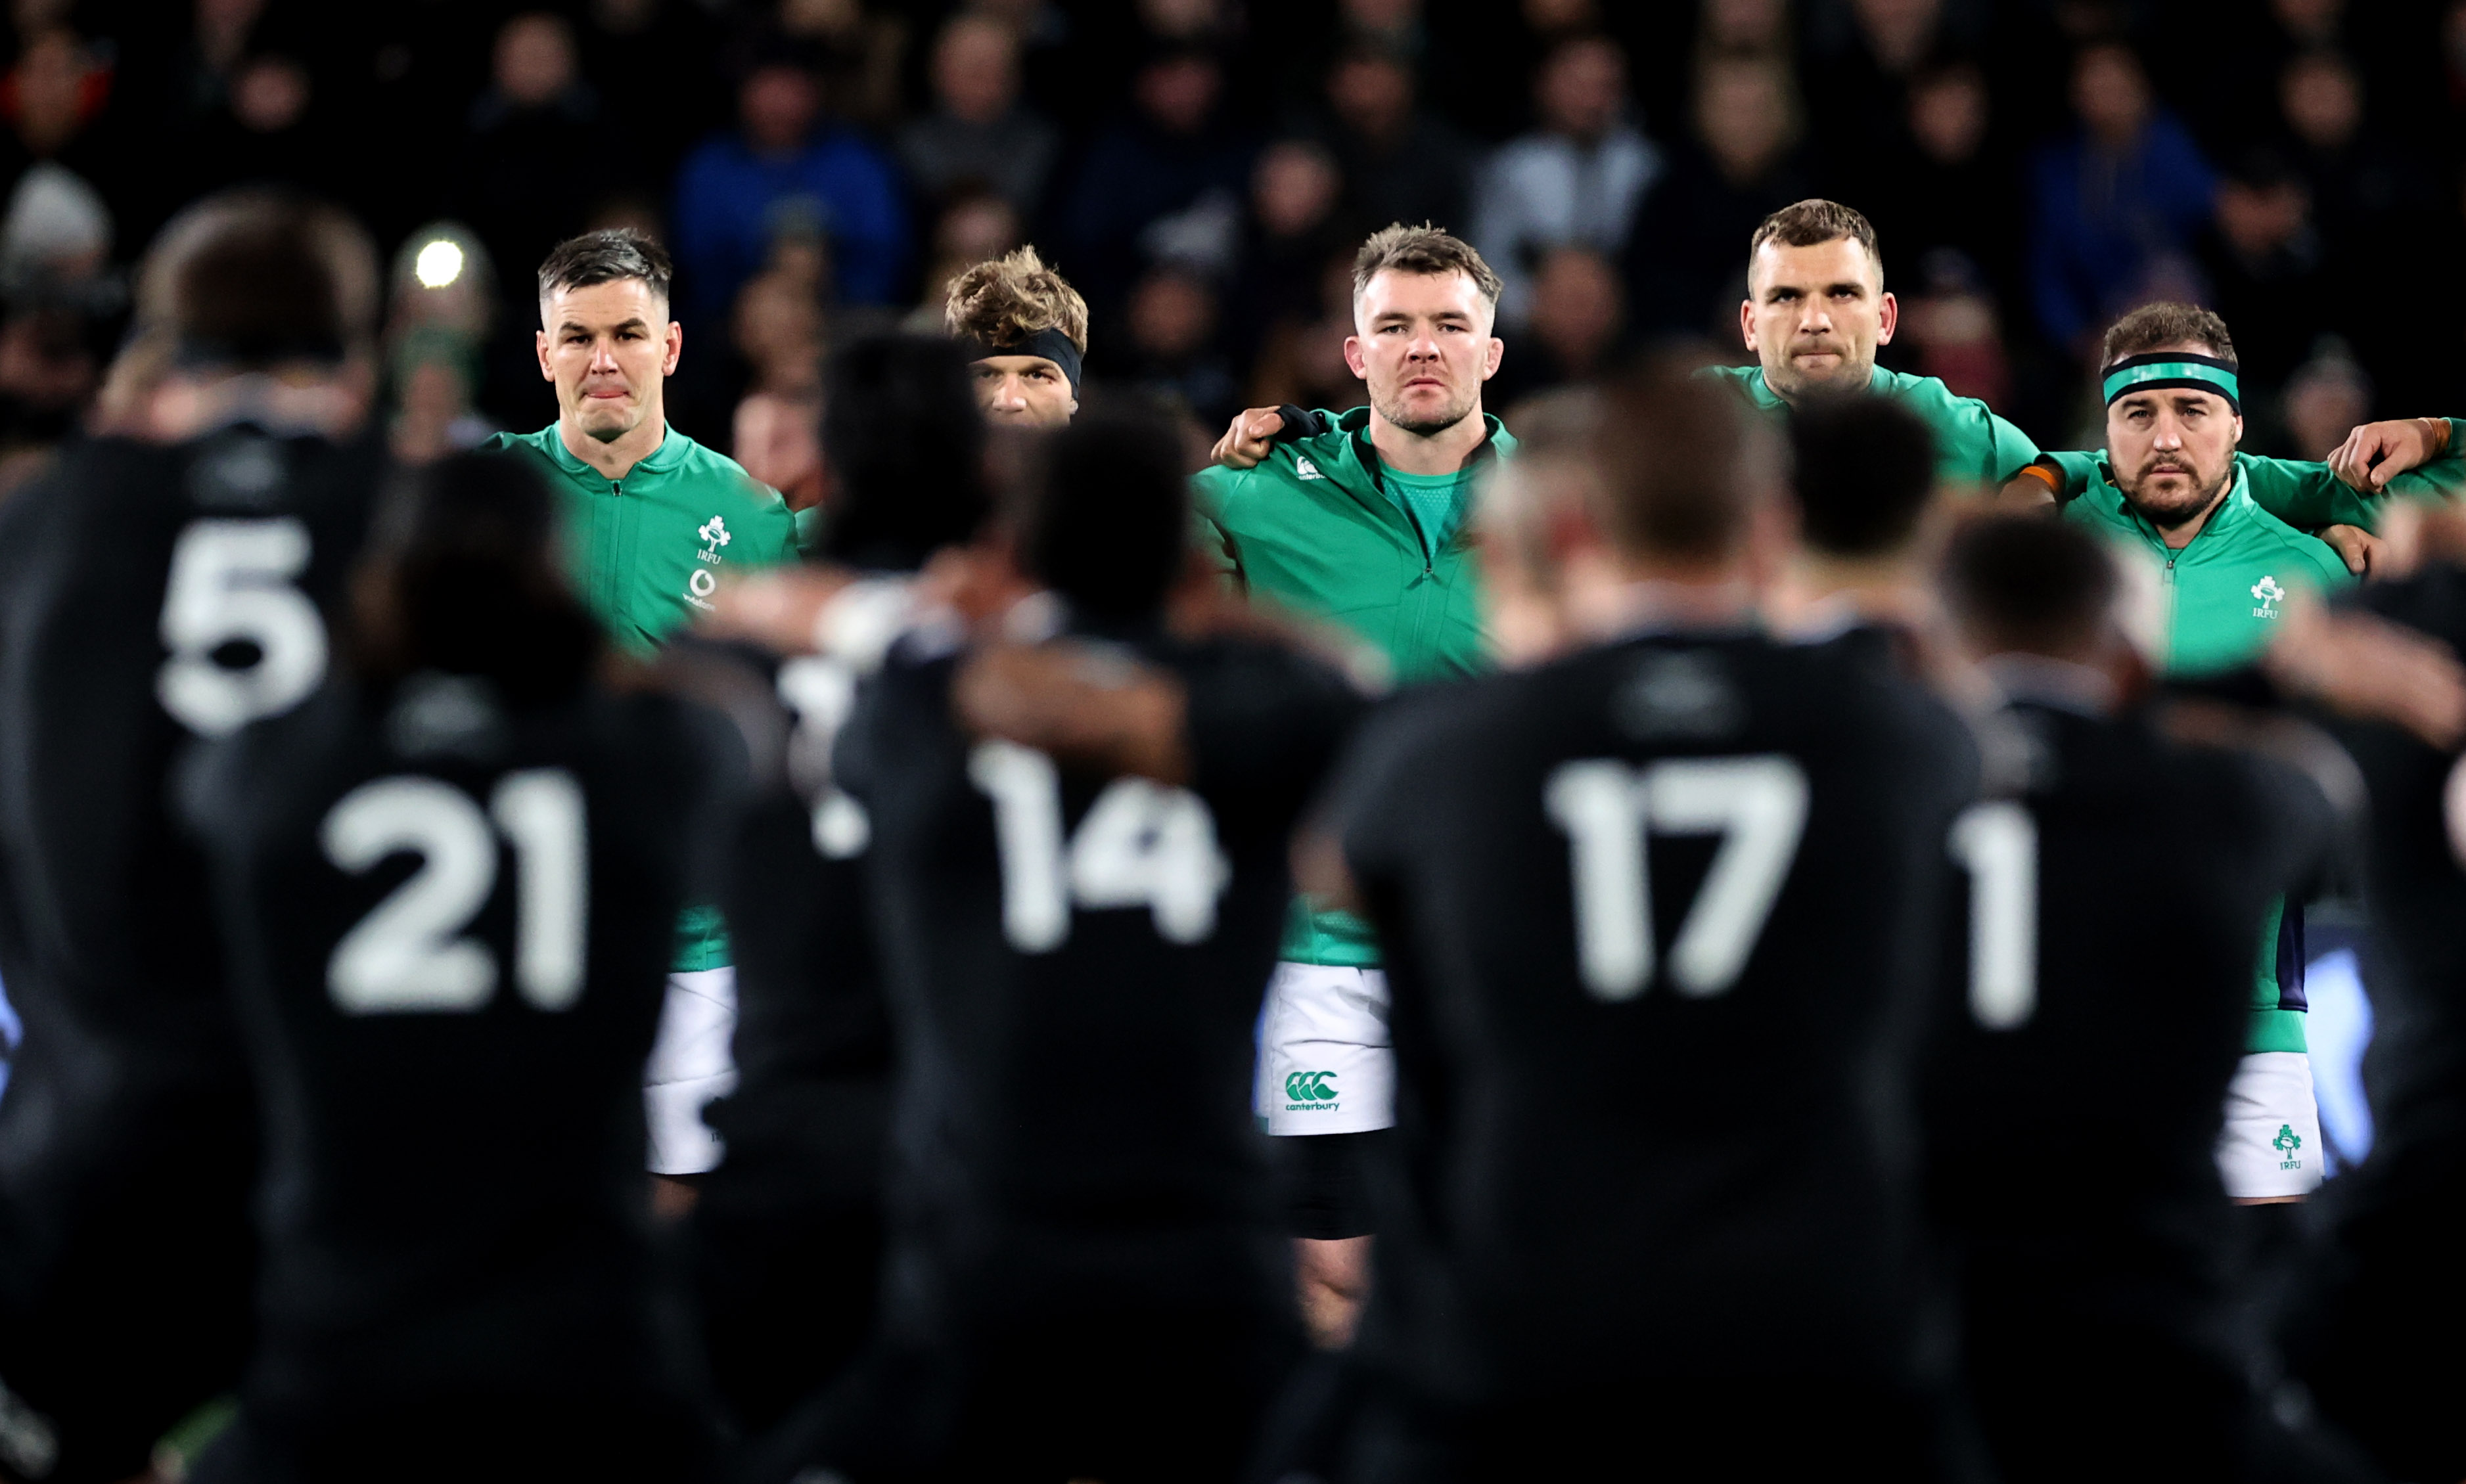 All Blacks vs Ireland third Test Kick-off time, TV details and team news